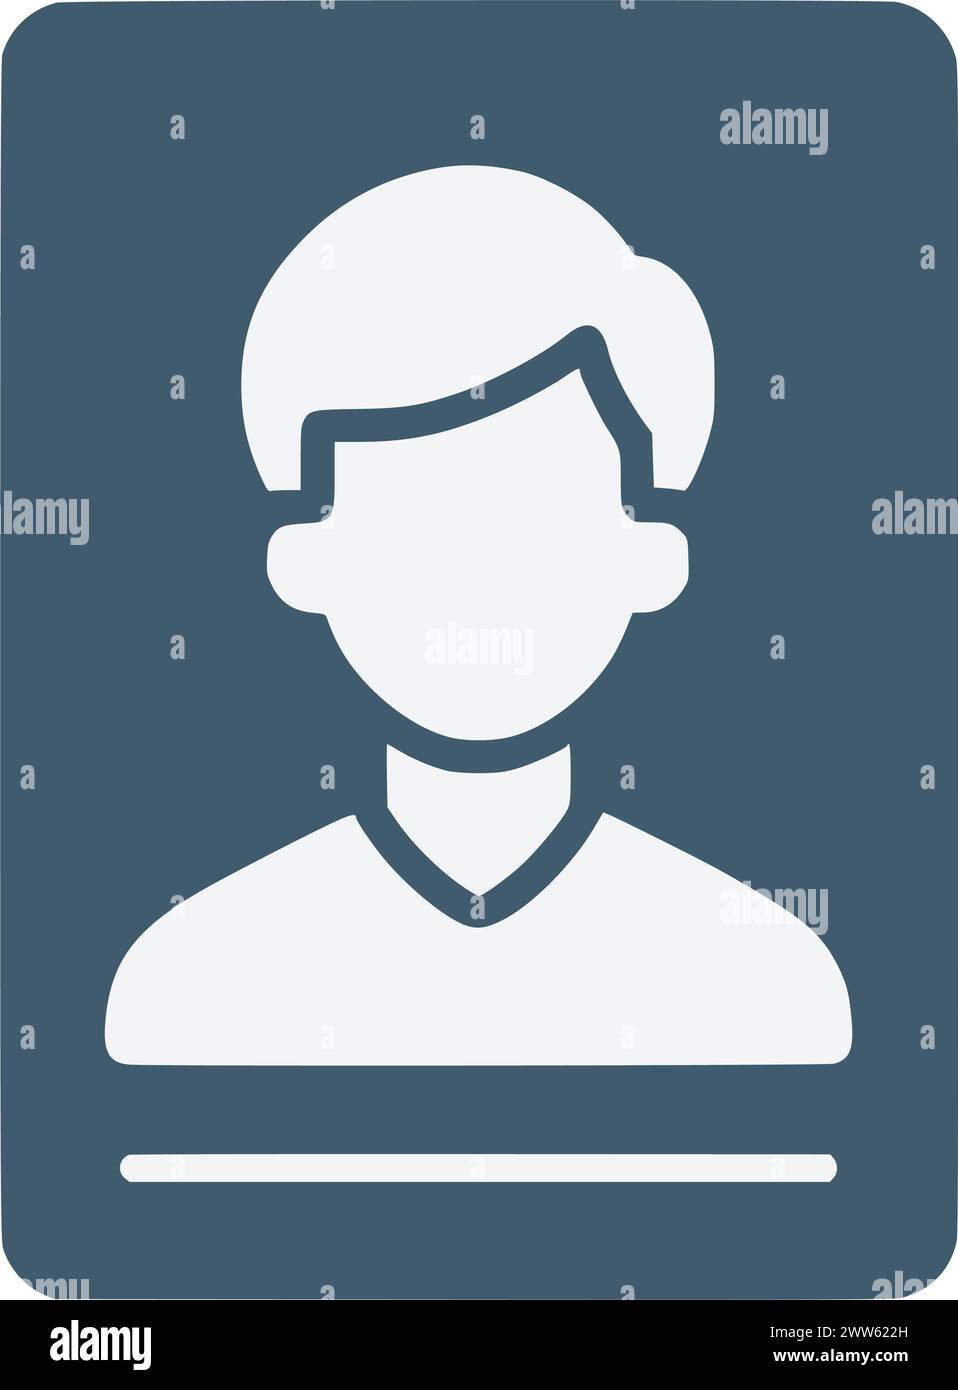 Profile icon, Male avatar icon User circles. Default Profile Picture anonymous user avatar. Person icon, Head icon Social network avatar portrait. Mal Stock Vector